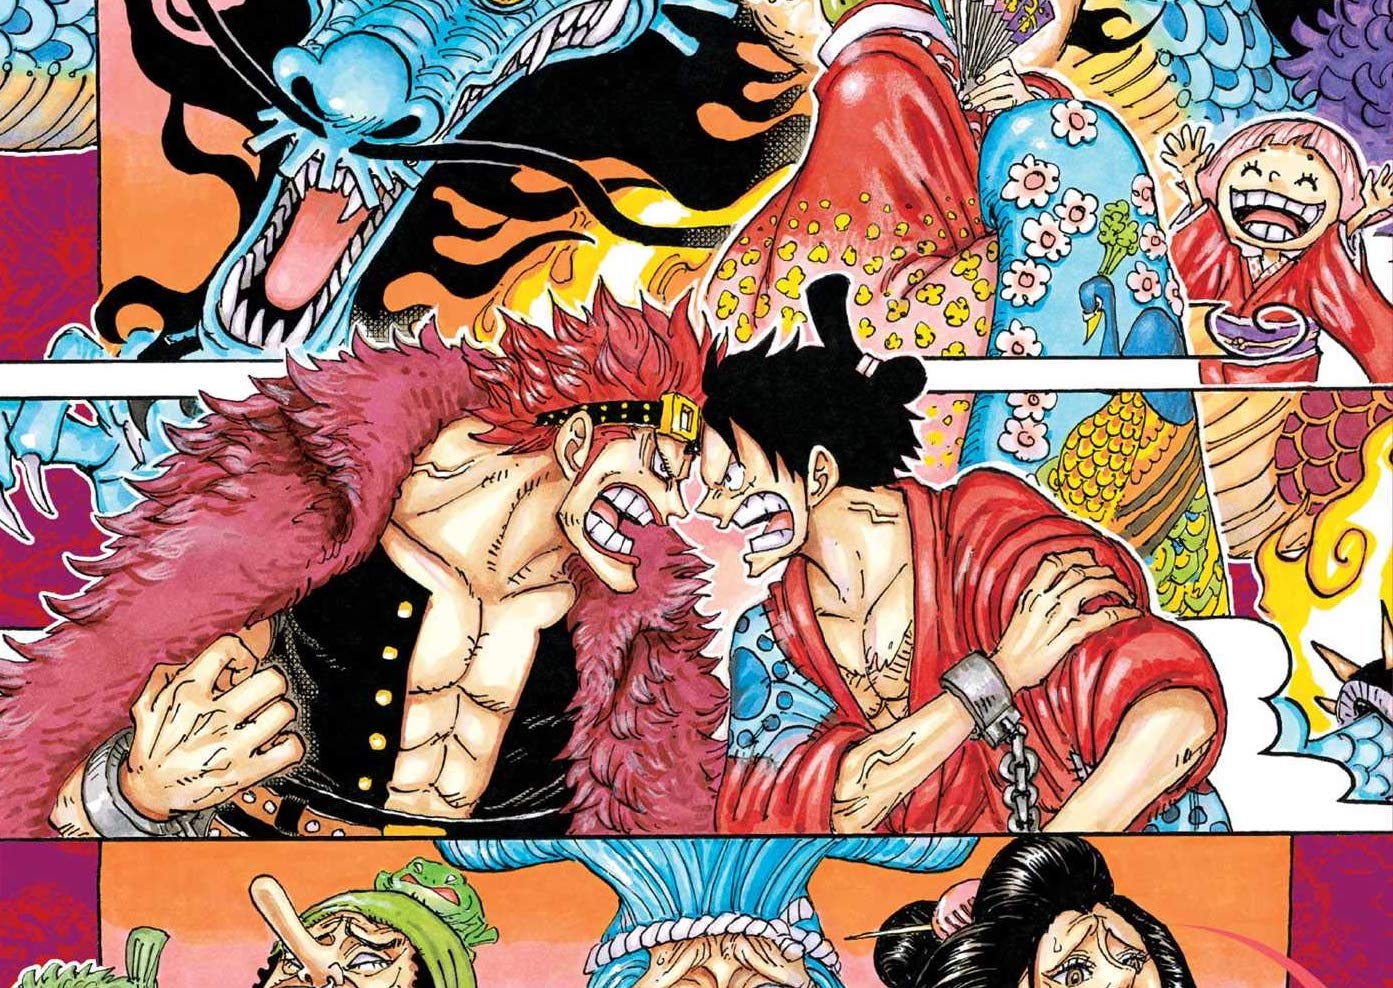 One Piece Vol. 92: Introducing Komurasaki the Oiran Review